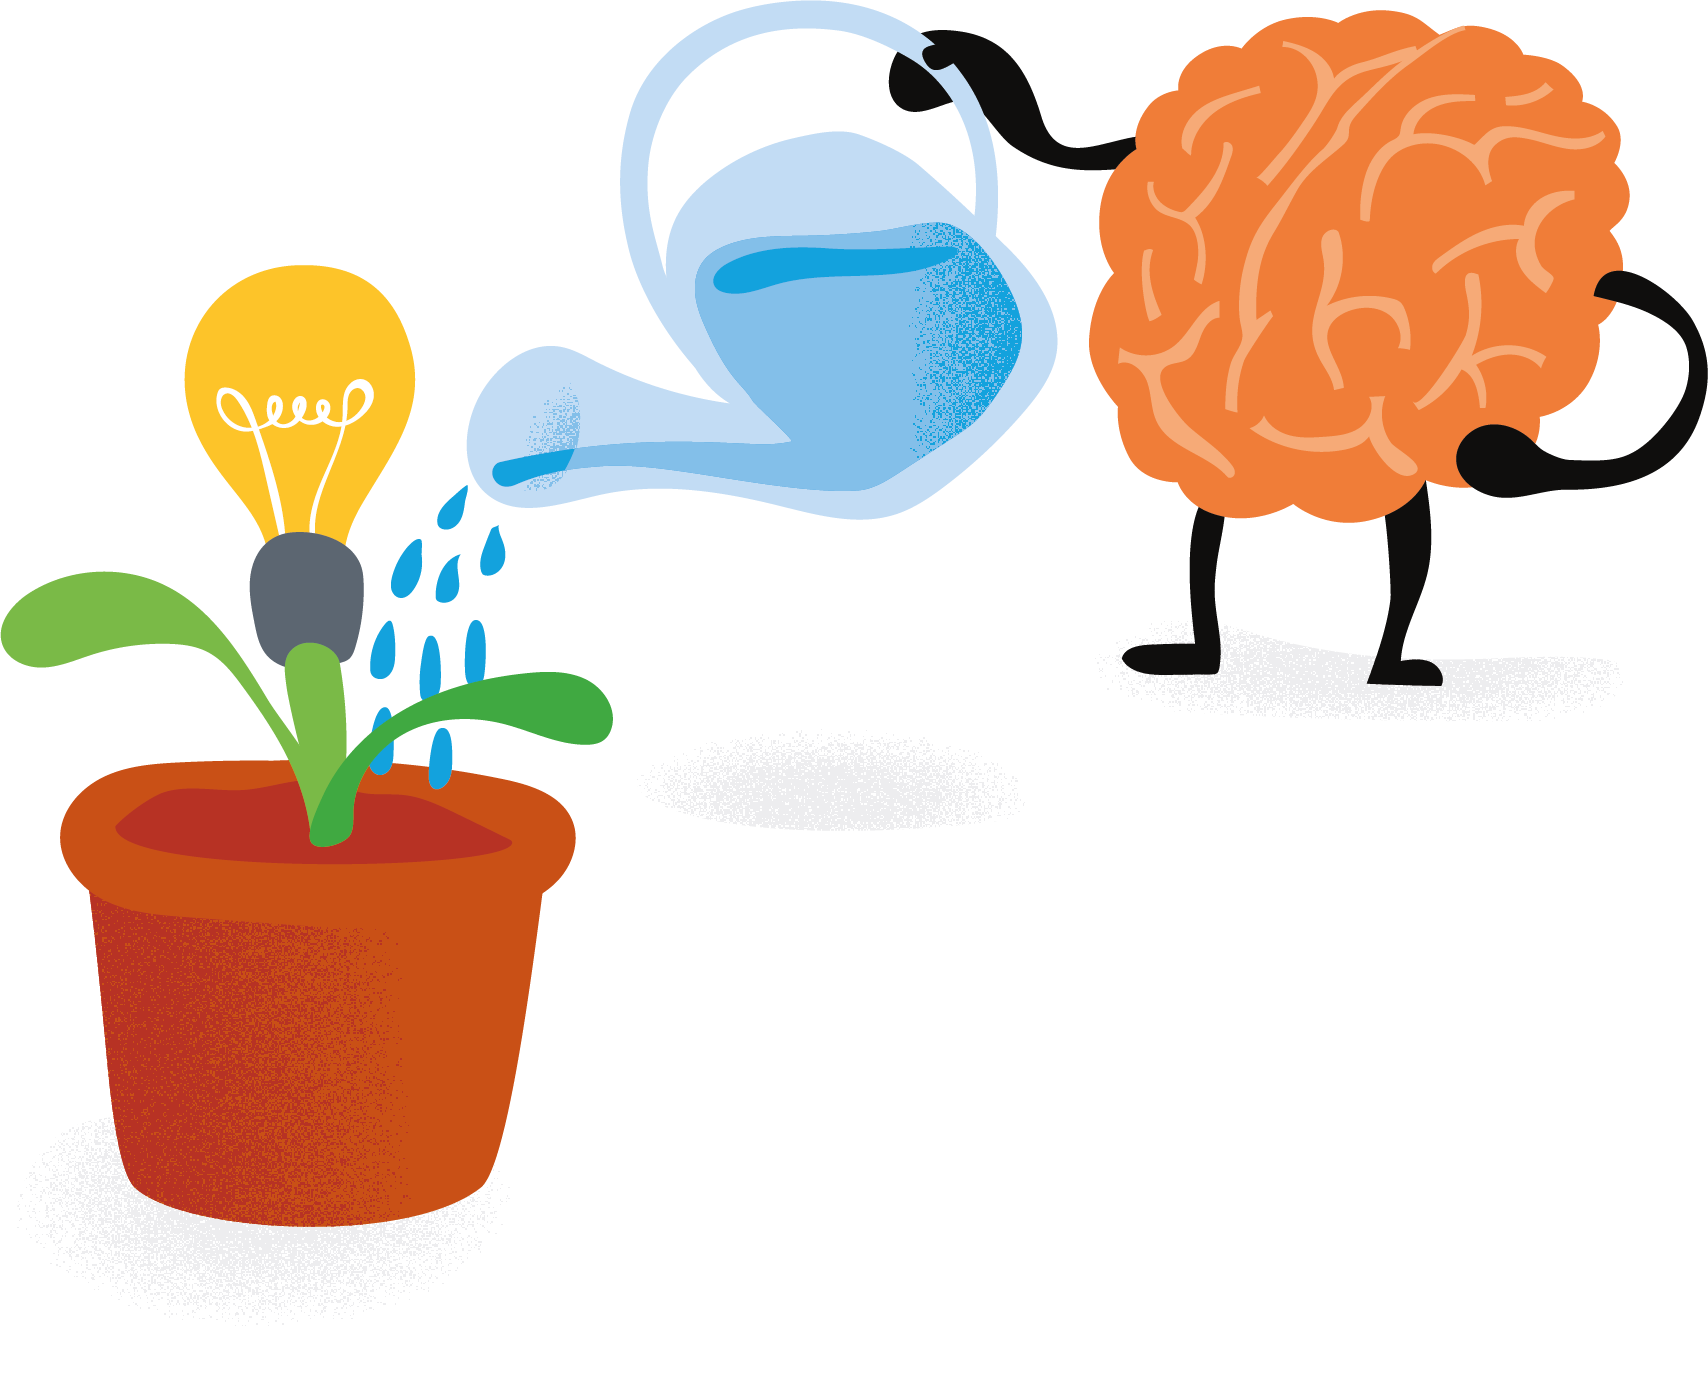 image of brain watering a flower pot